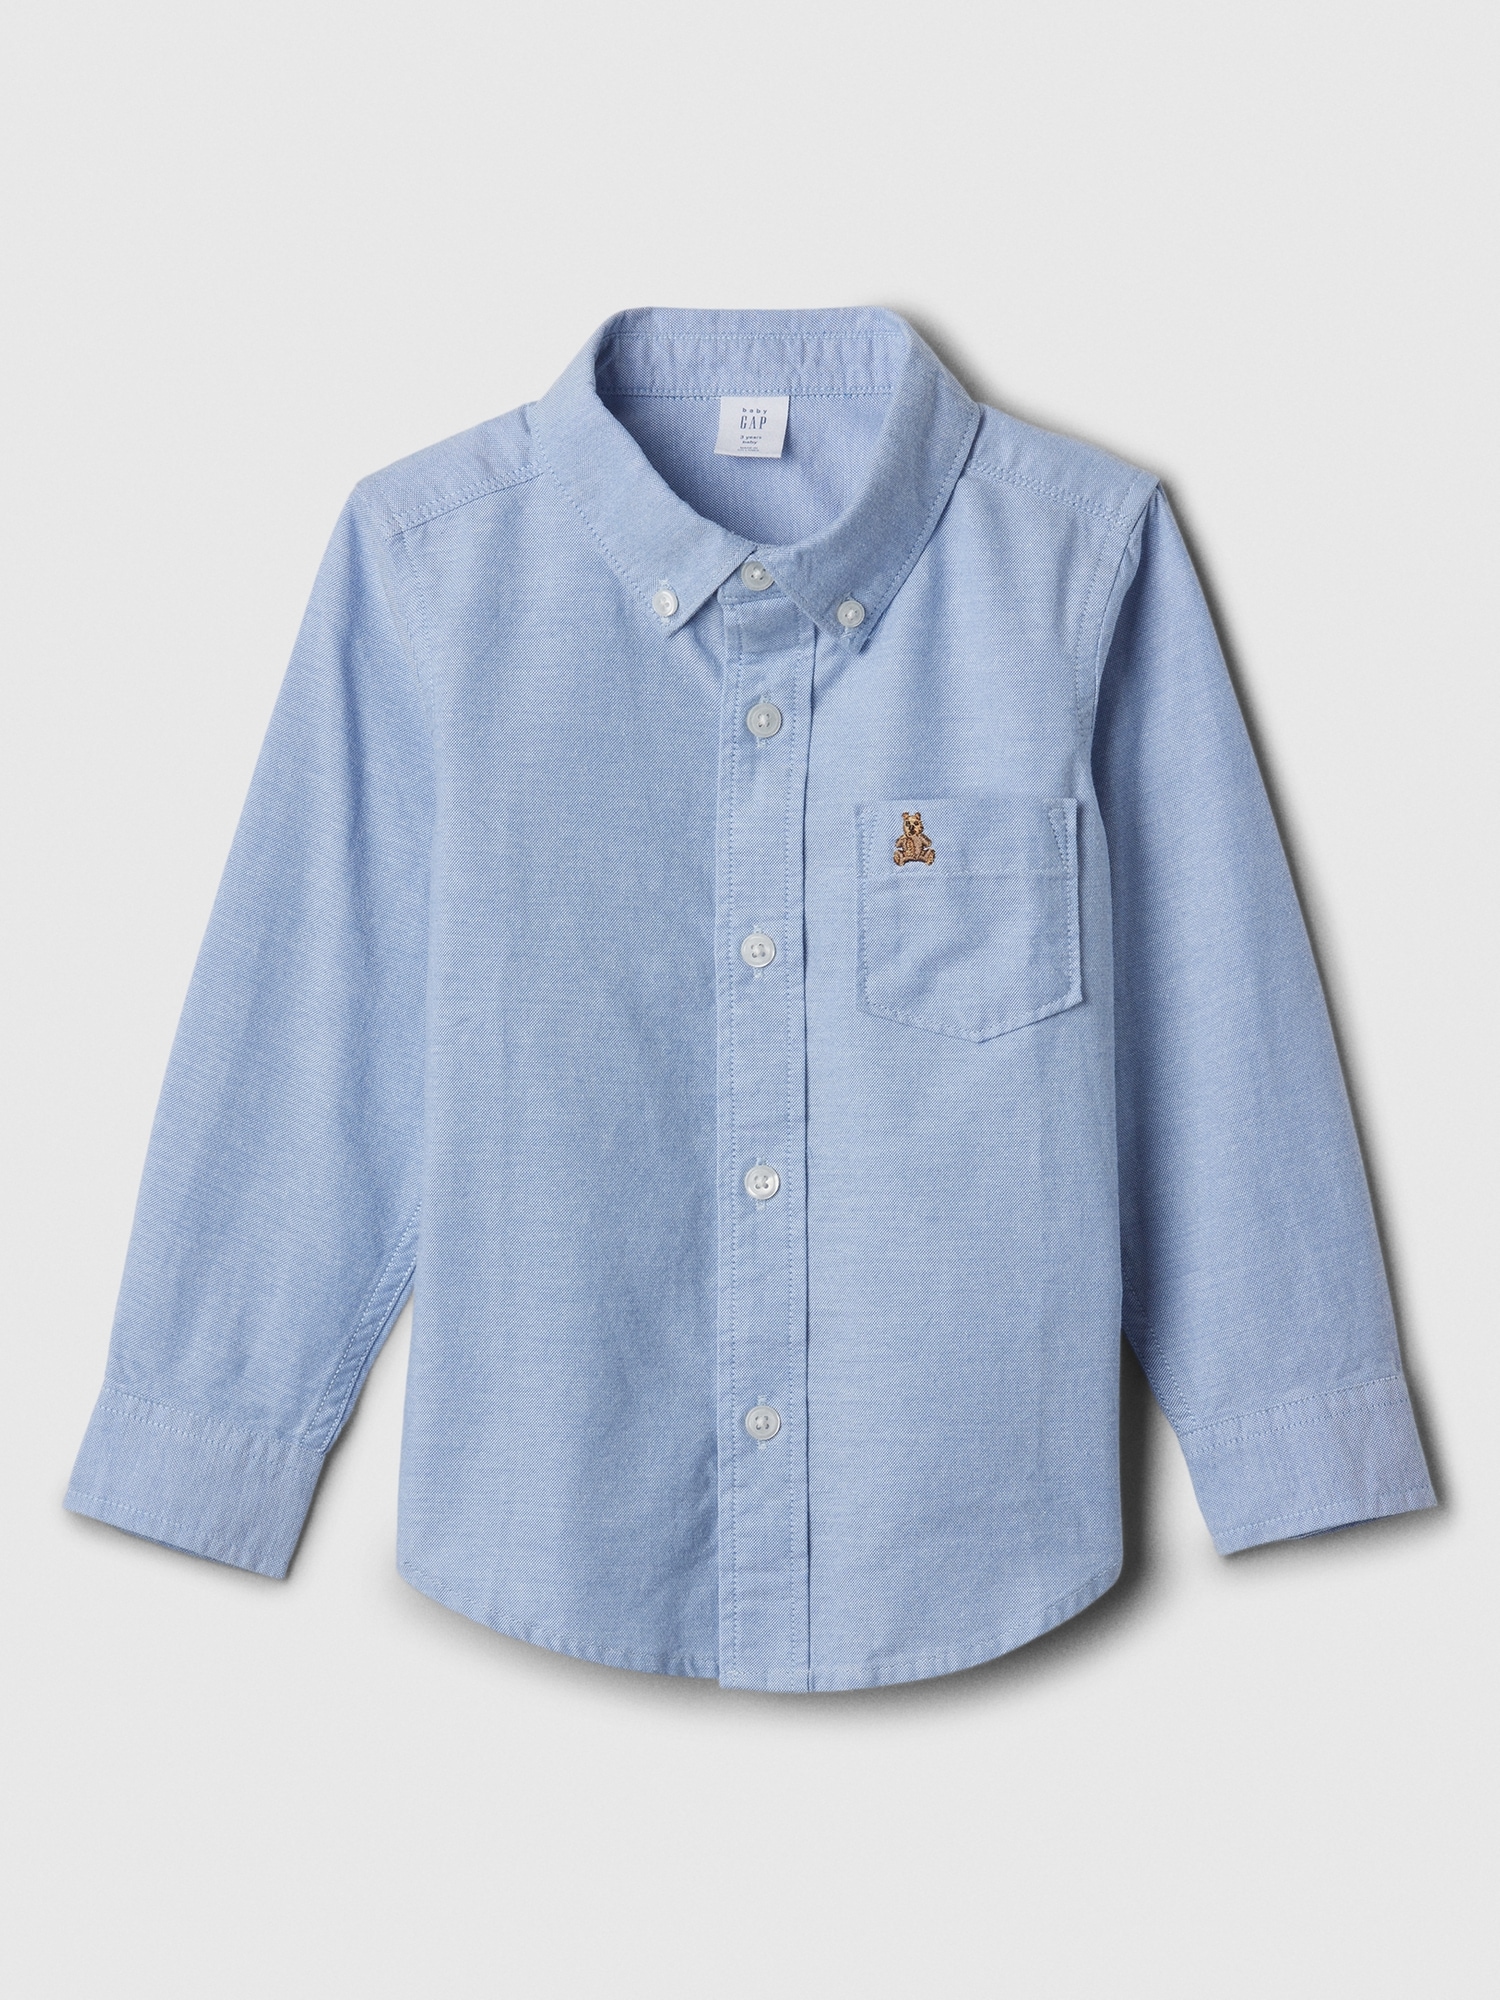 Toddler Oxford Convertible Shirt